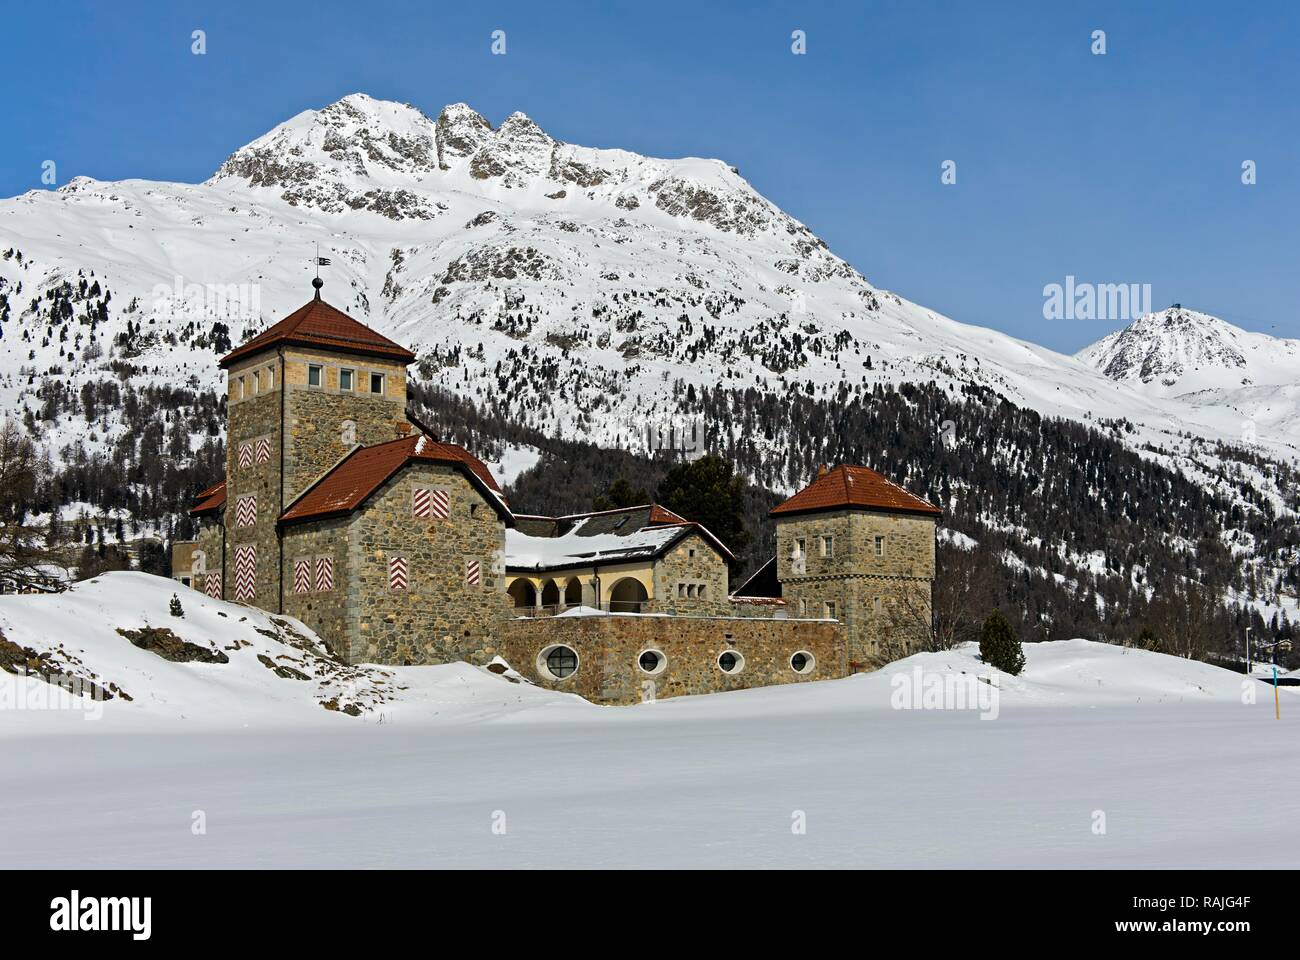 Castle Crap da Sass in the snow, Surlej, Engadin, Grisons, Switzerland Stock Photo